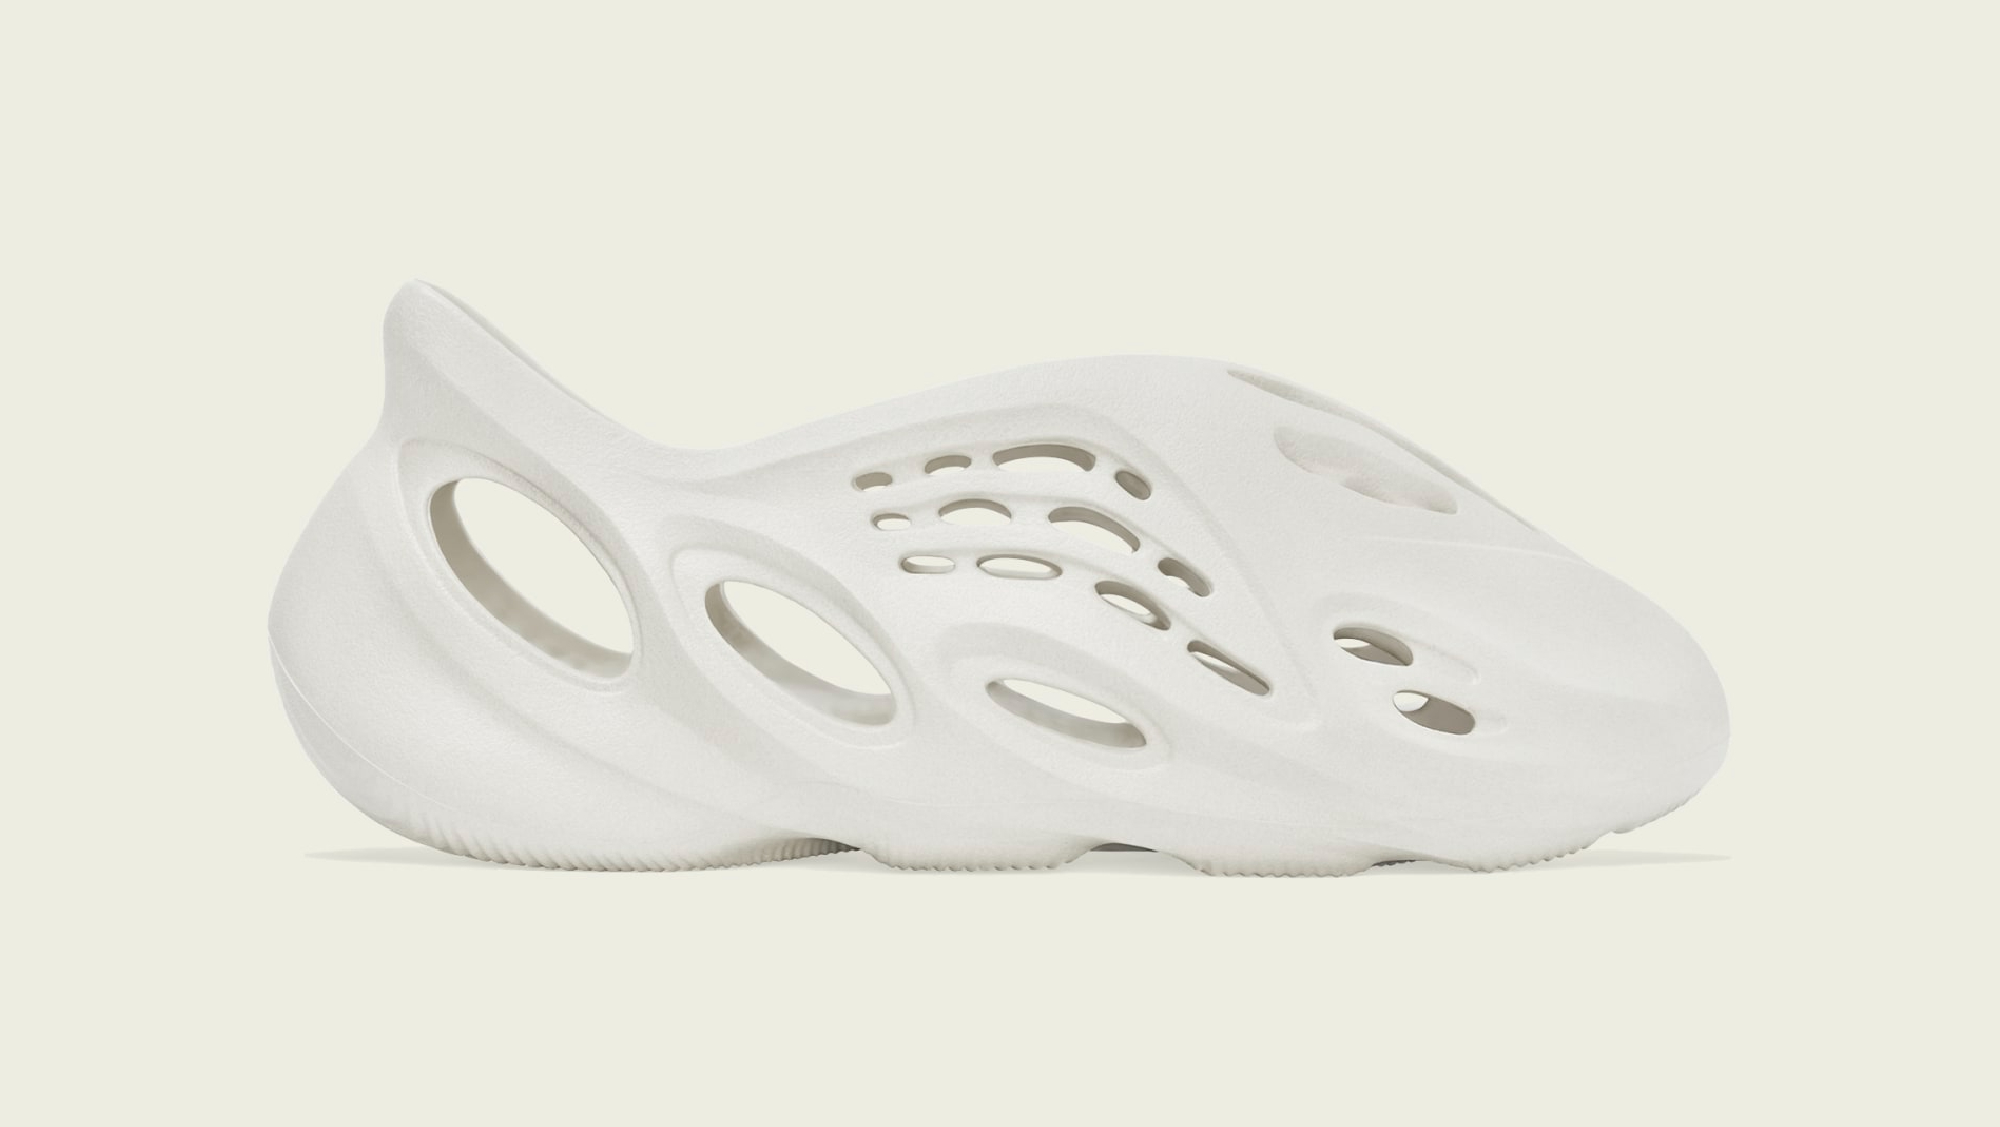 Adidas Yeezy Foam Runner &#x27;Sand&#x27; FY4567 Release Date